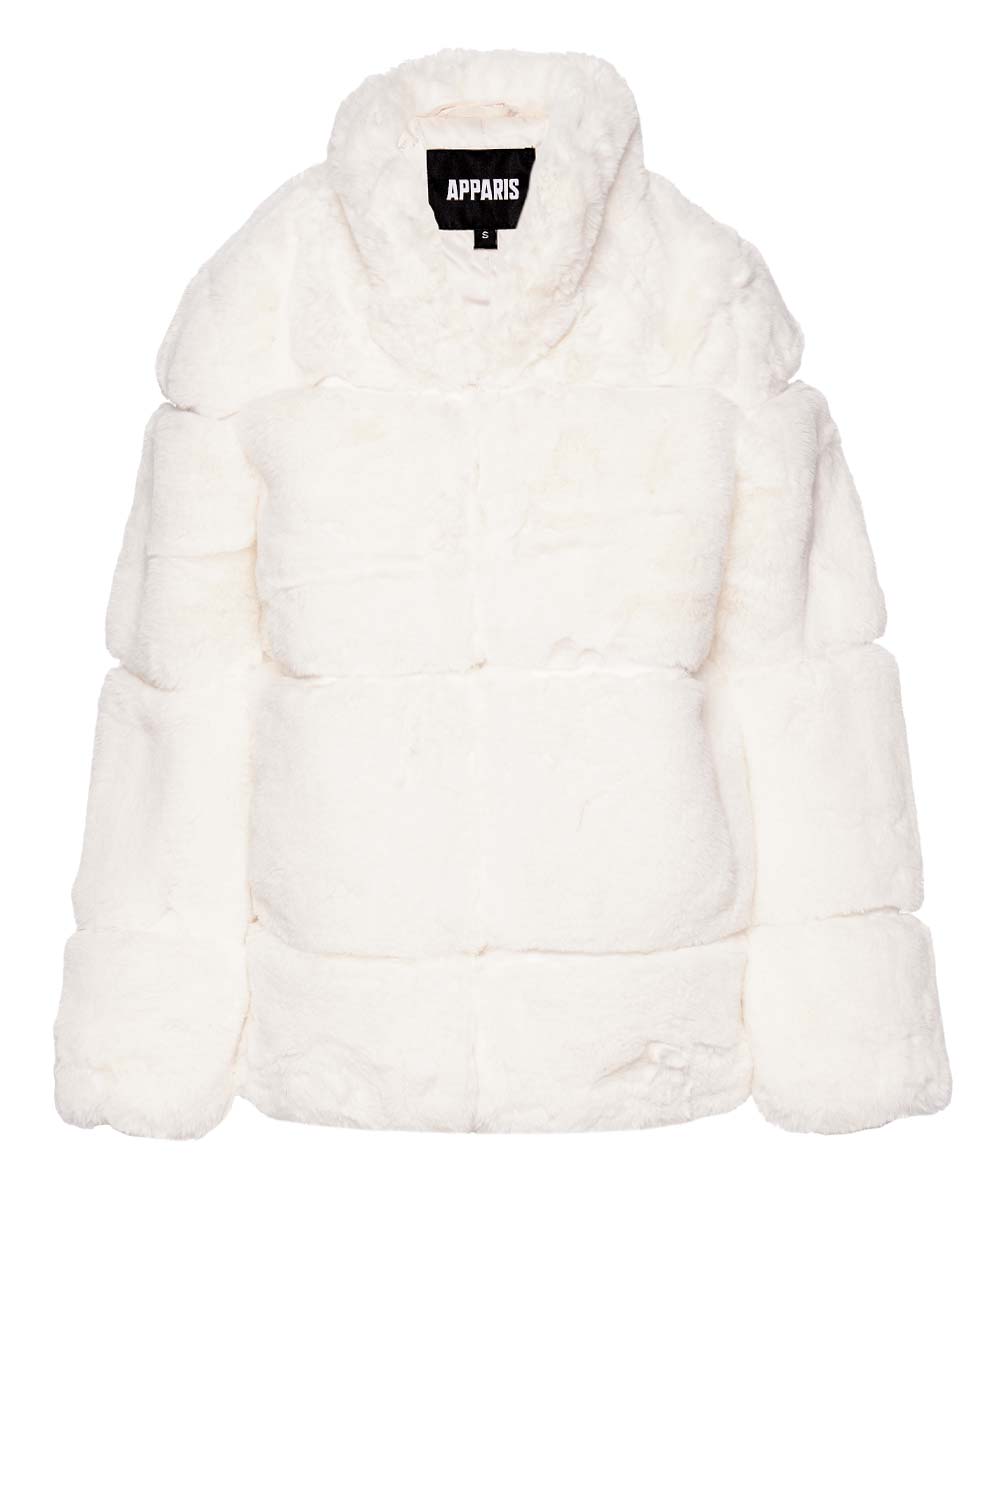 APPARIS Skylar Ivory Faux Fur Jacket